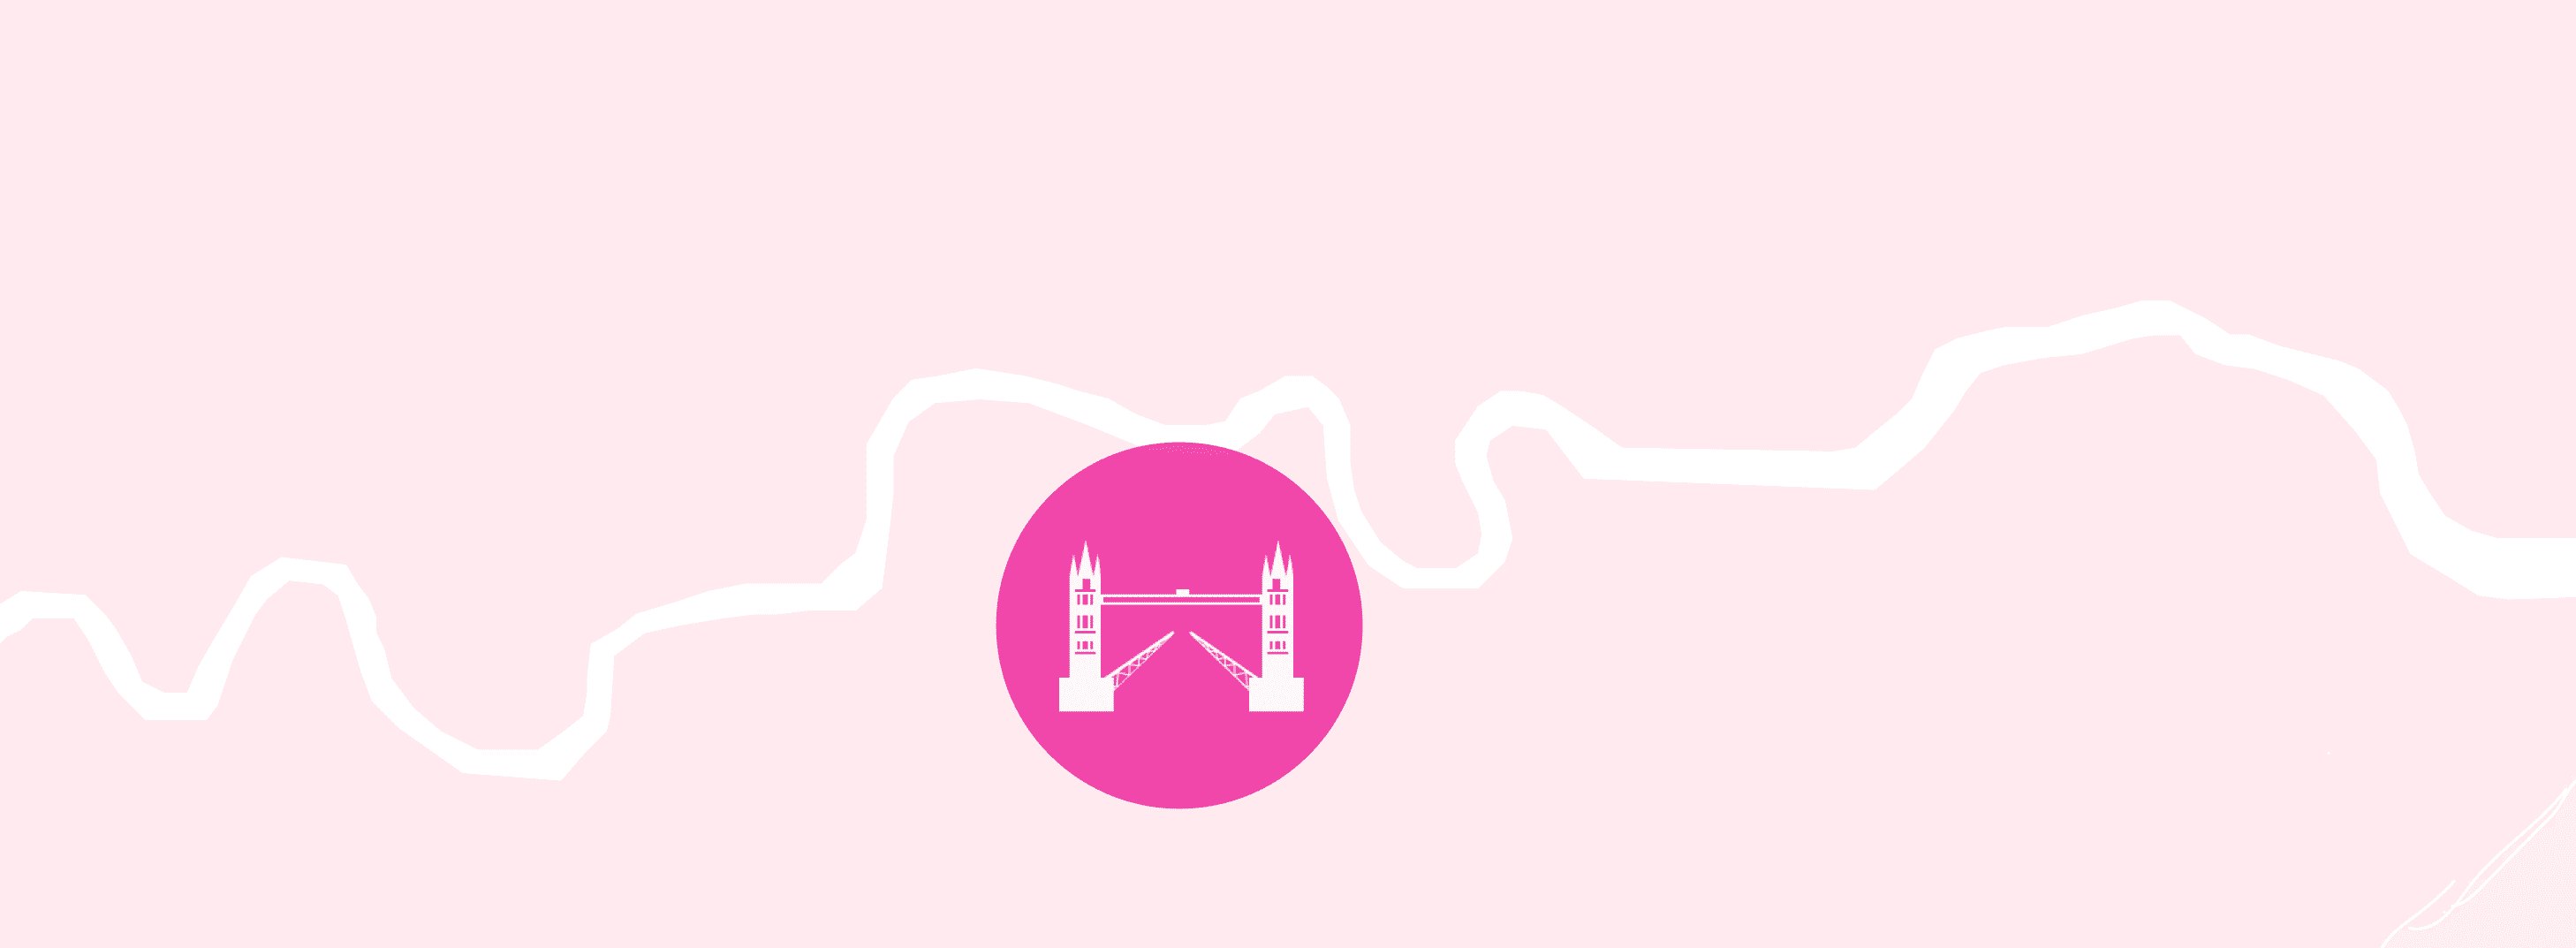 Announcing Our First Festival Hub: London Bridge